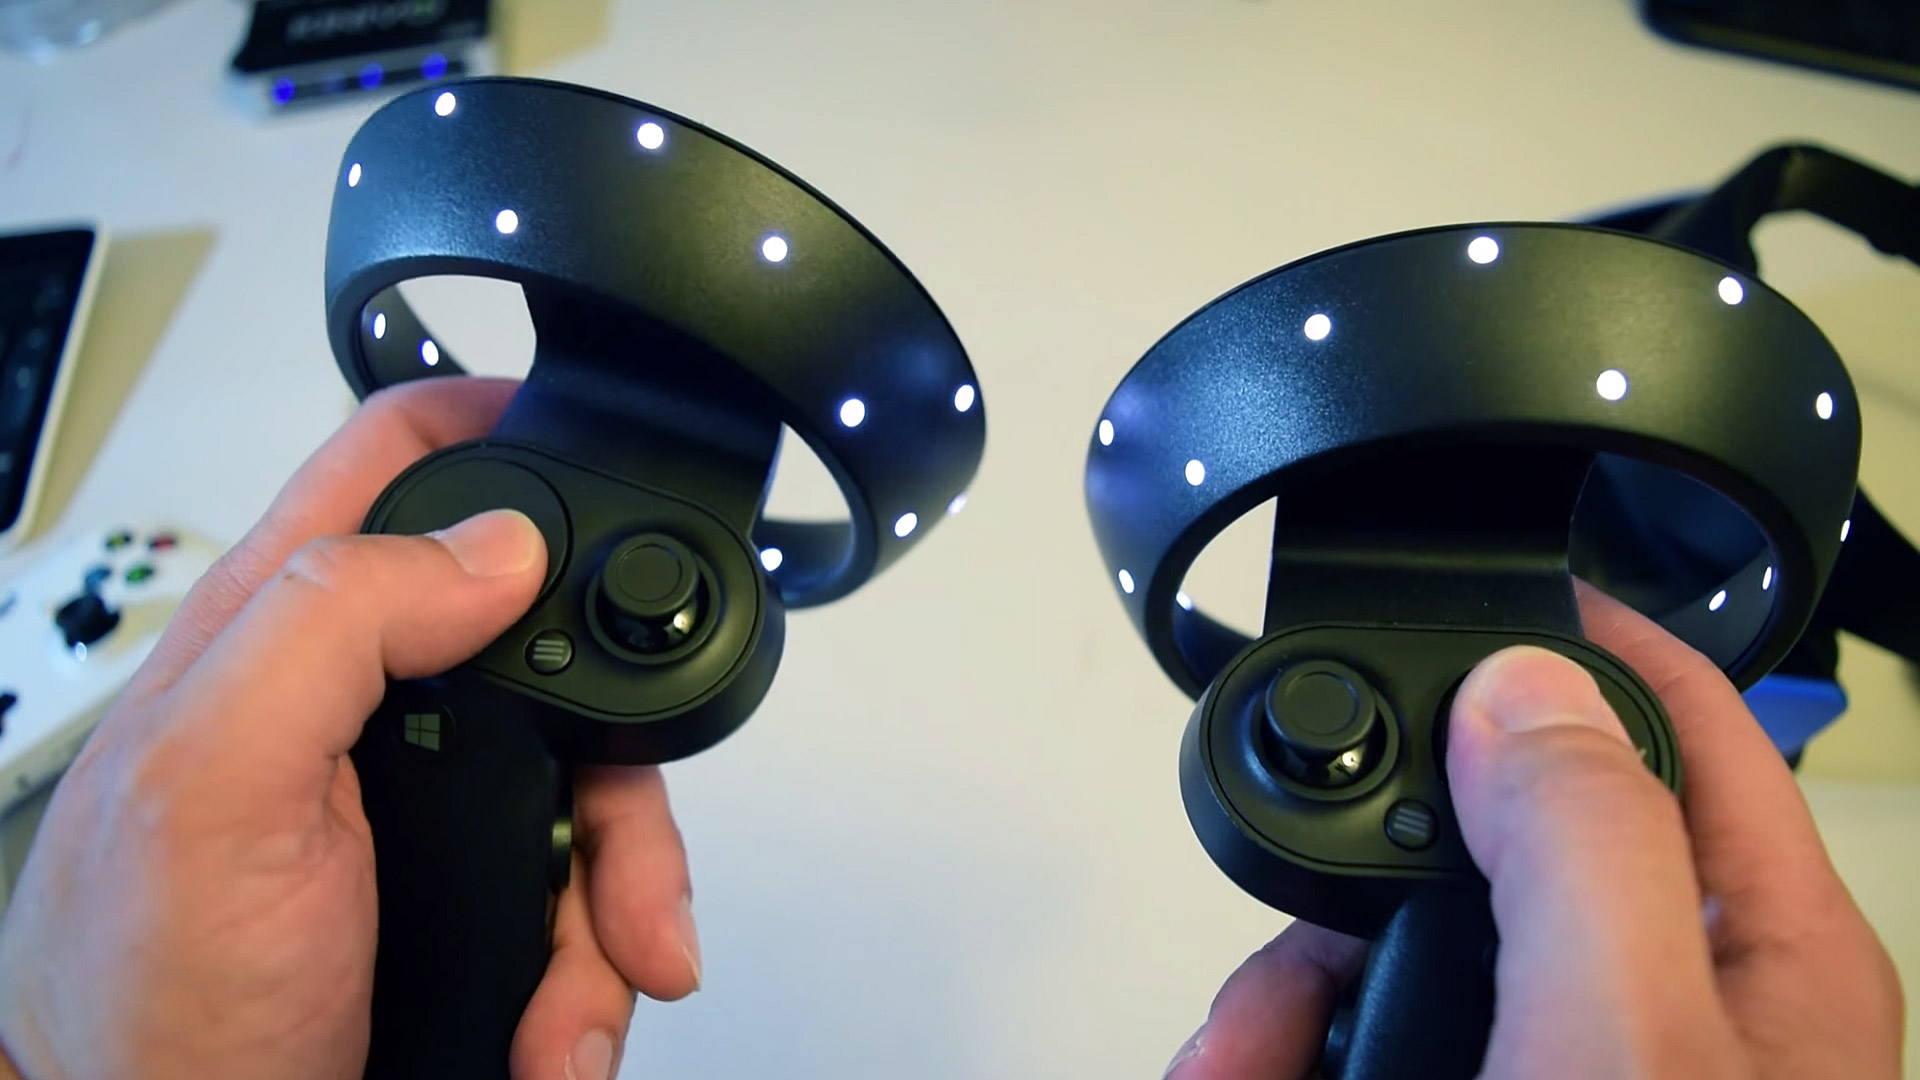 Bliv overrasket lærebog en gang Watch: Microsoft's "Mixed Reality" VR Controllers in Action